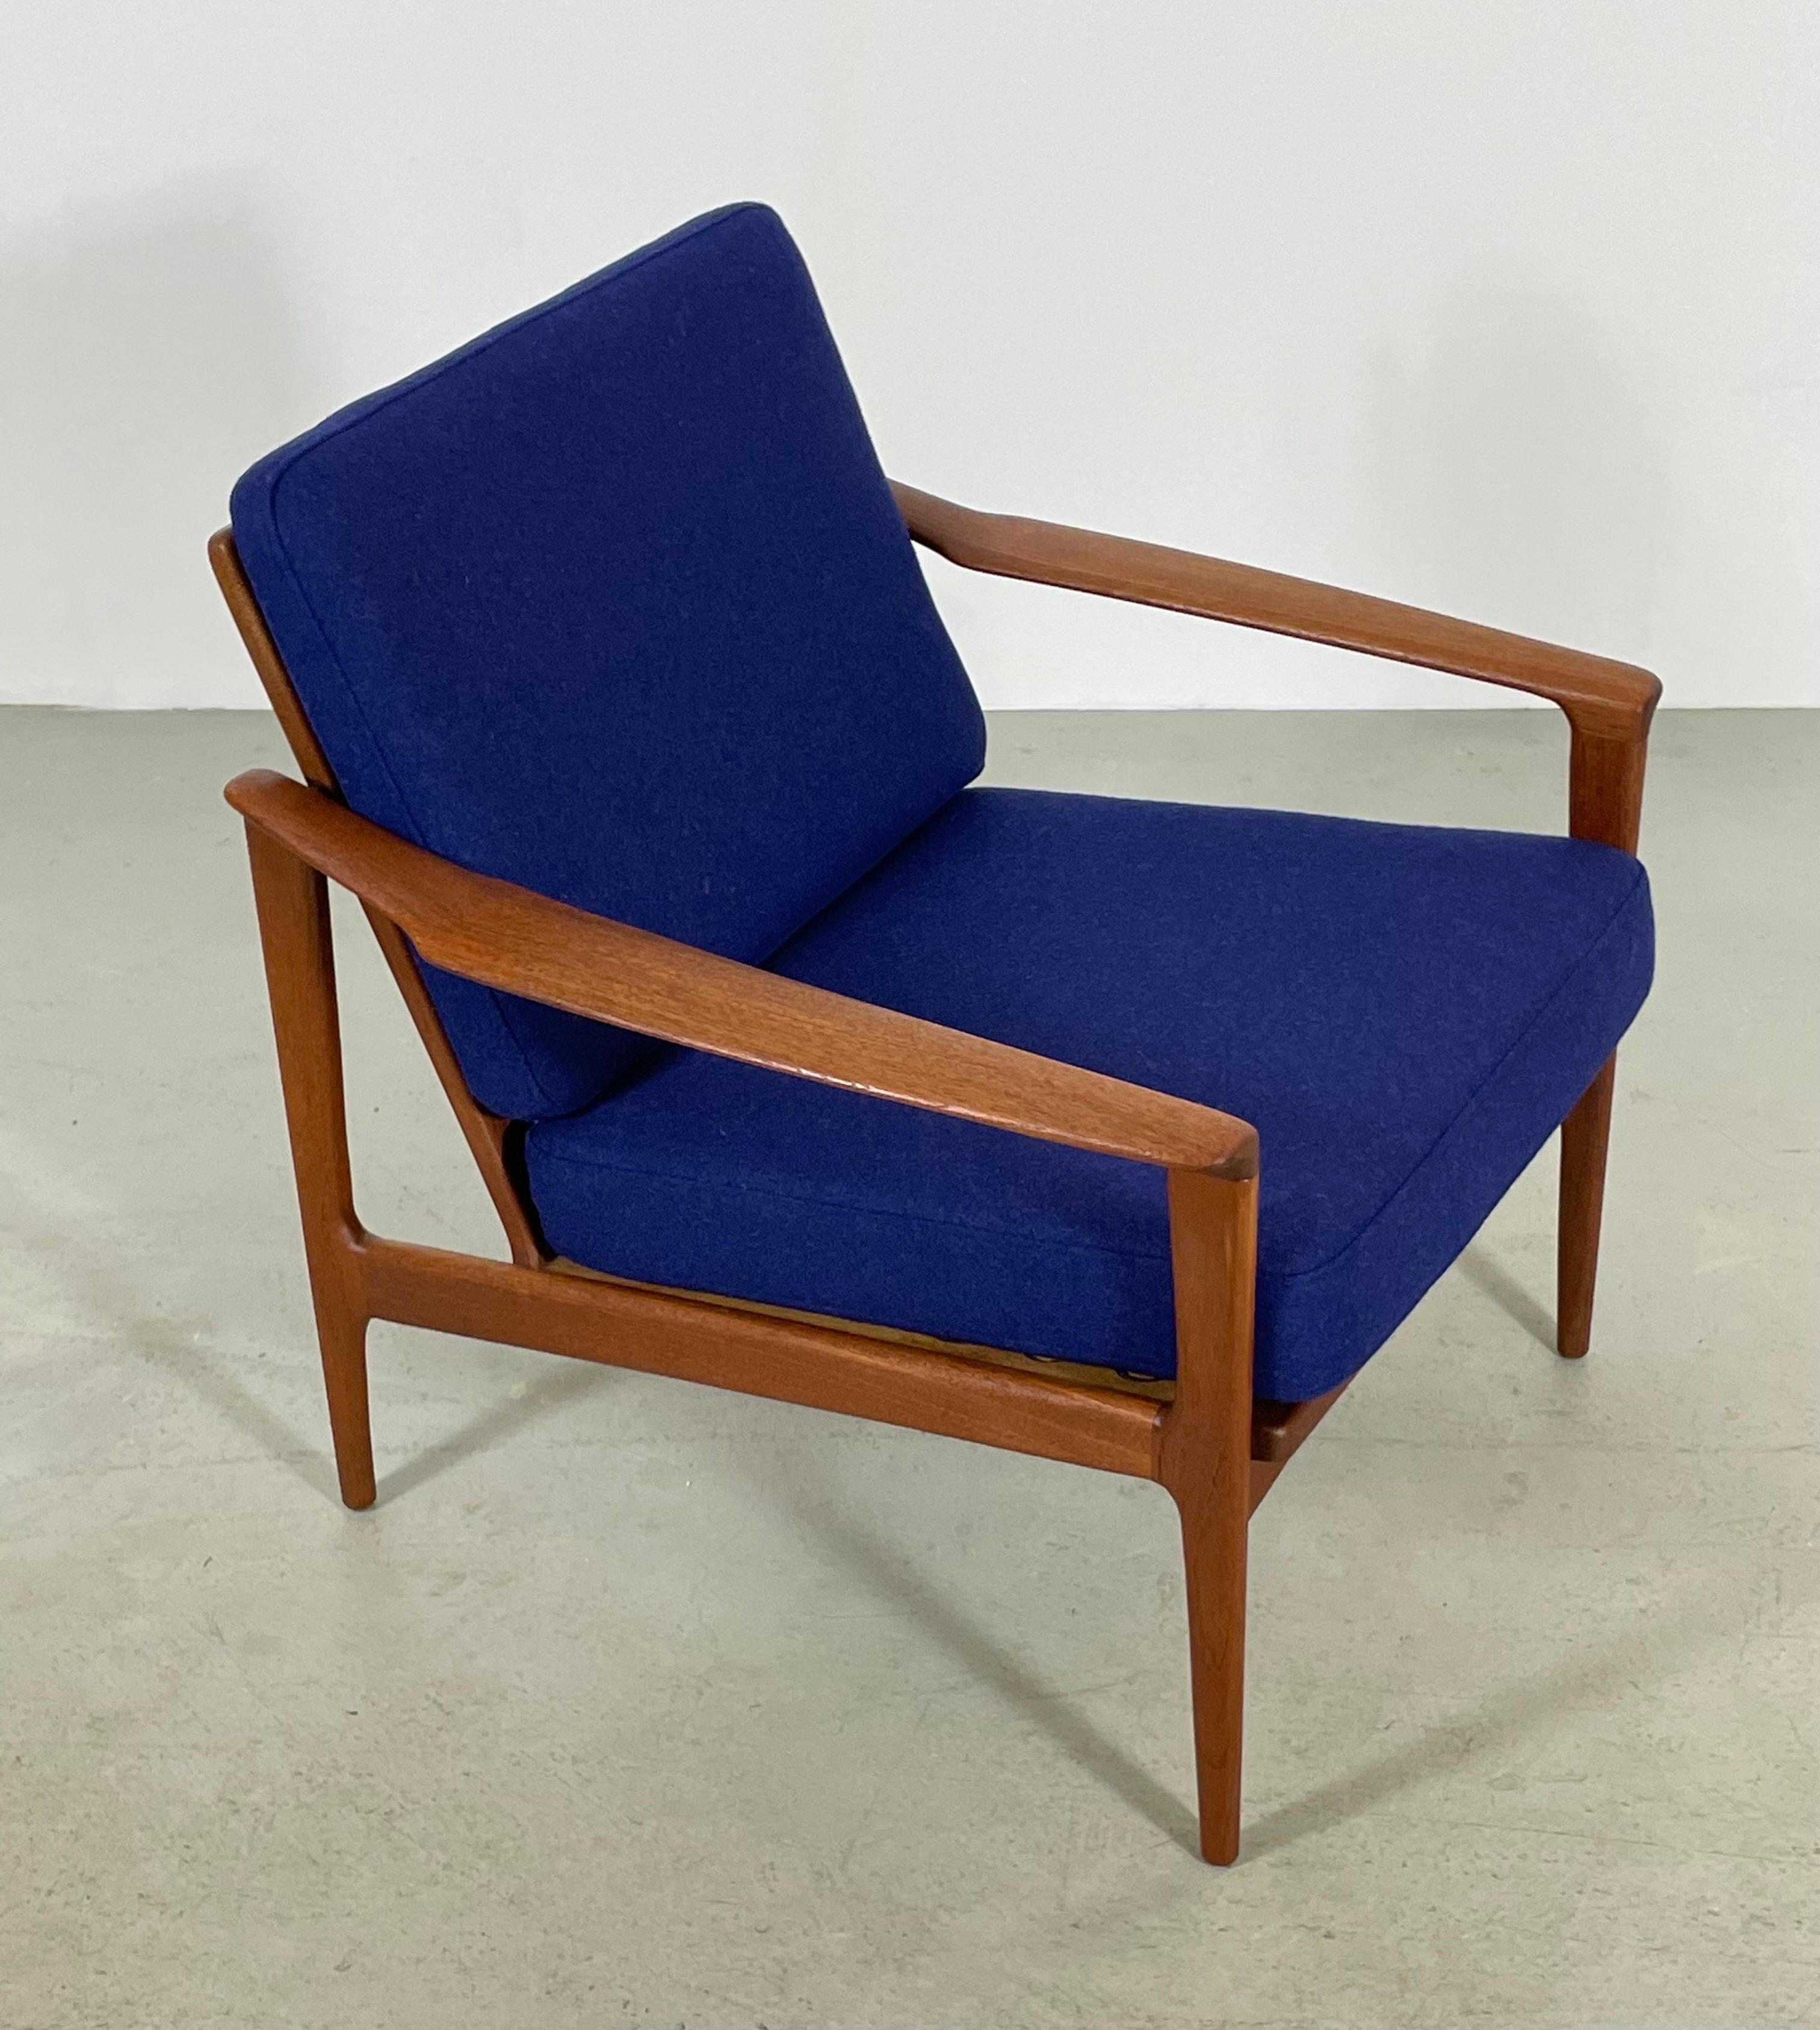 2x Mid-Century Teak Easy Chair by Ib Kofod-Larsen 1960s Denmark For Sale 3